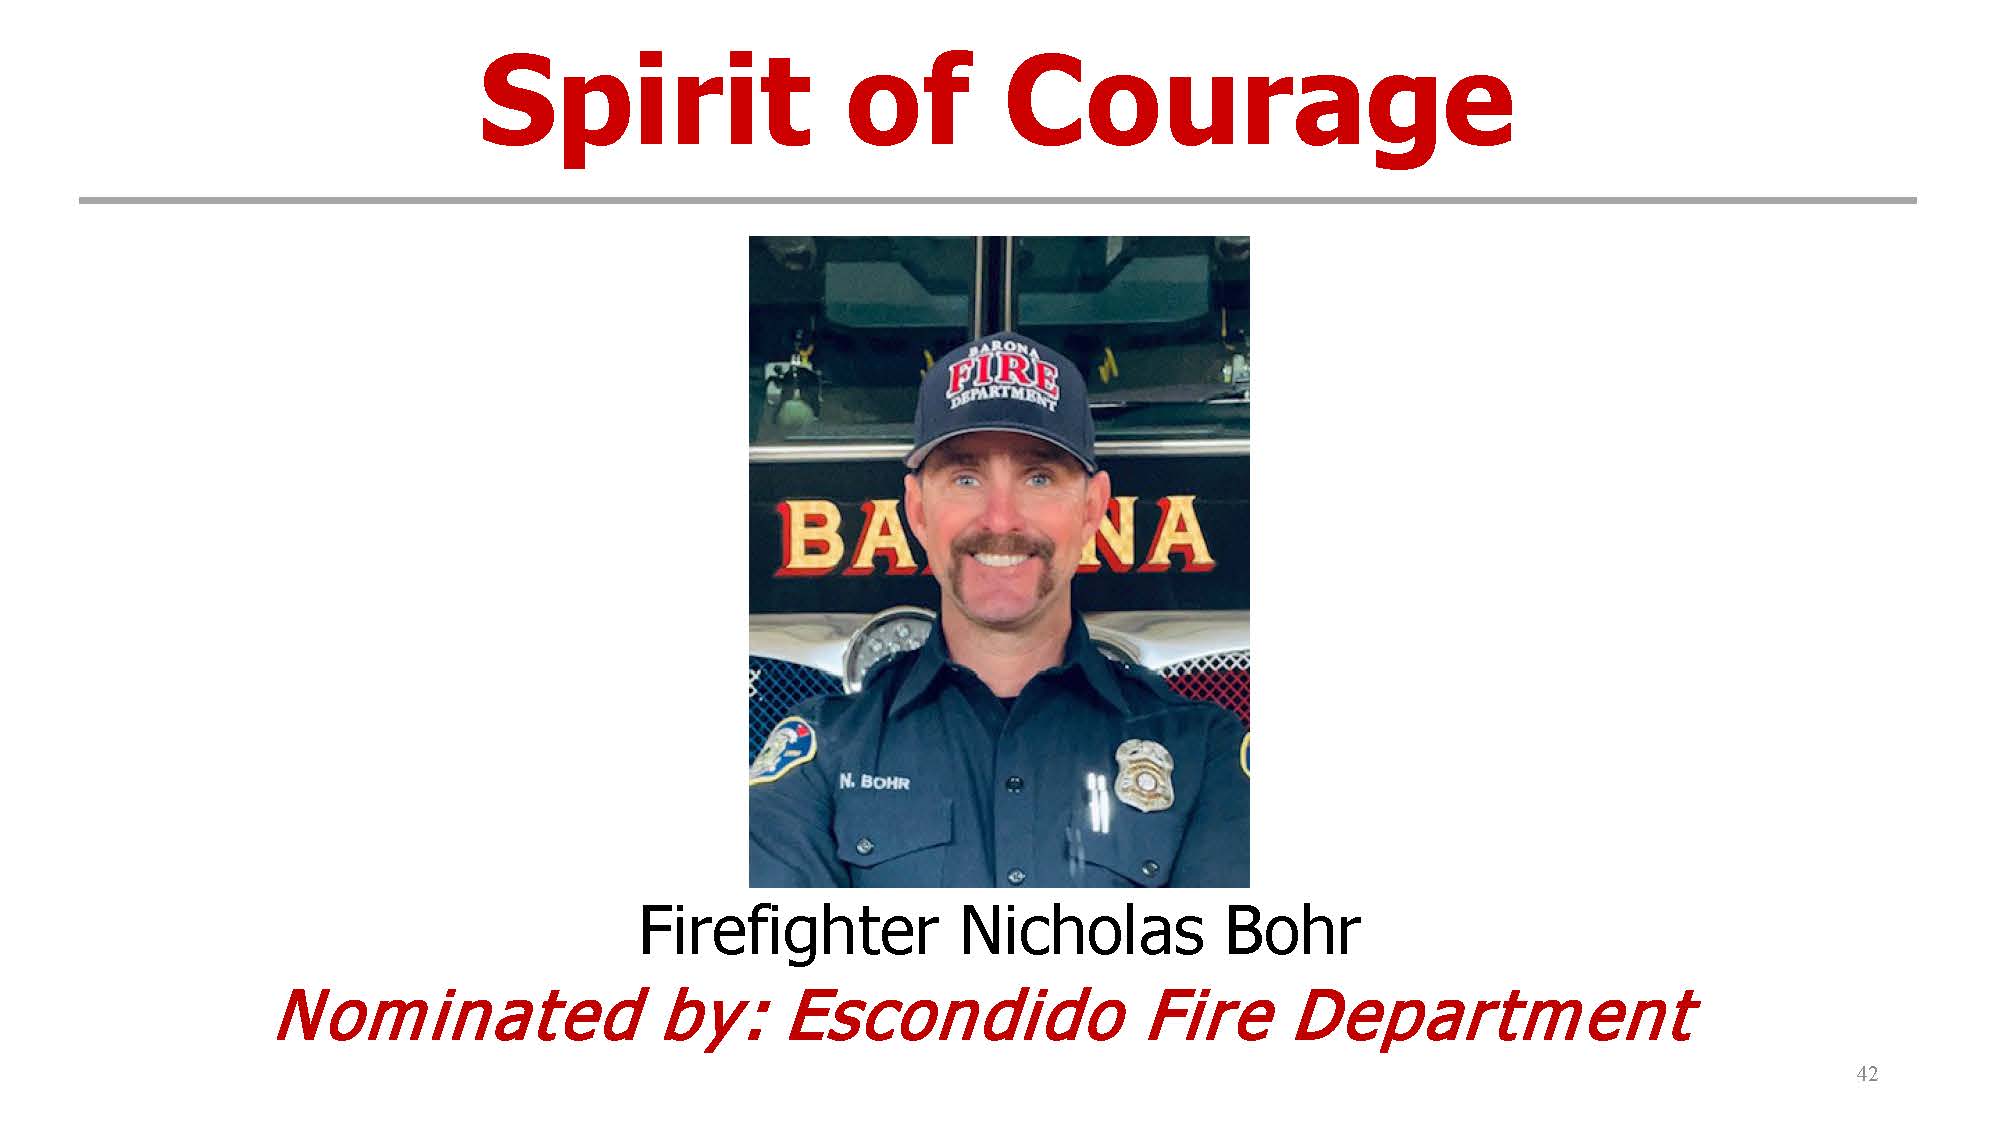 Spirit of Courage Award- Firefighter Nicholas Bohr